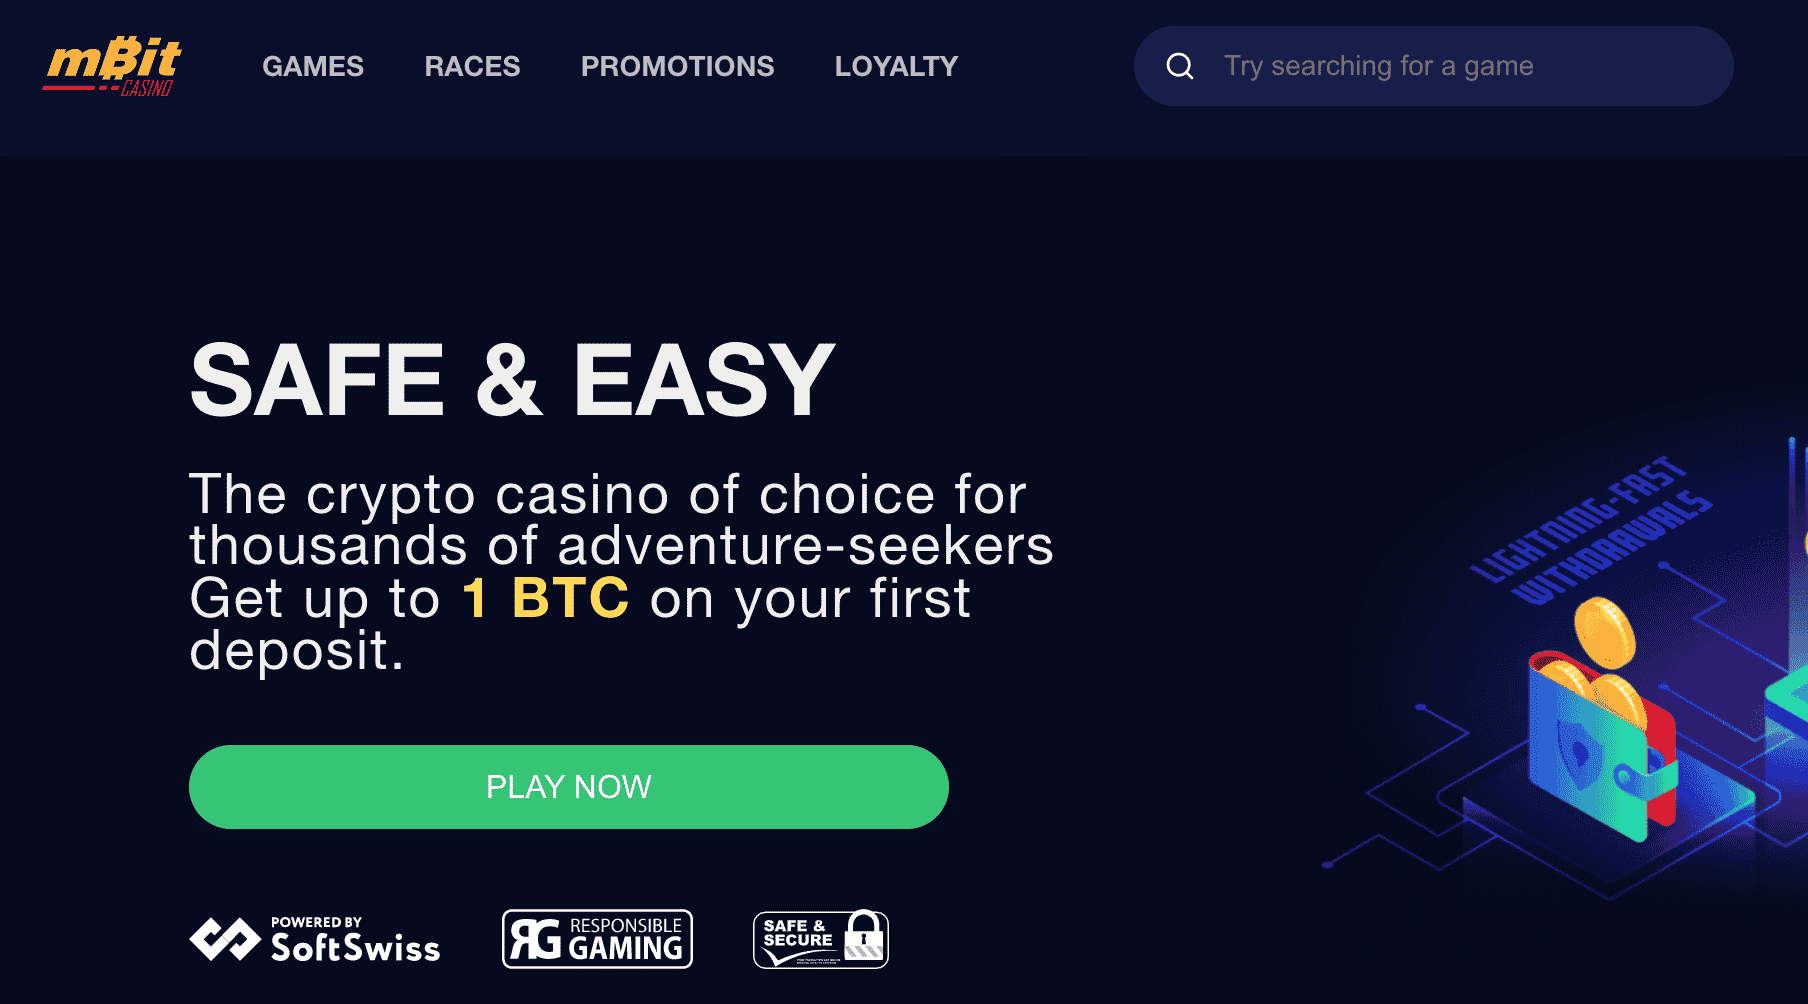 mBit - Crypto Casino in Korea